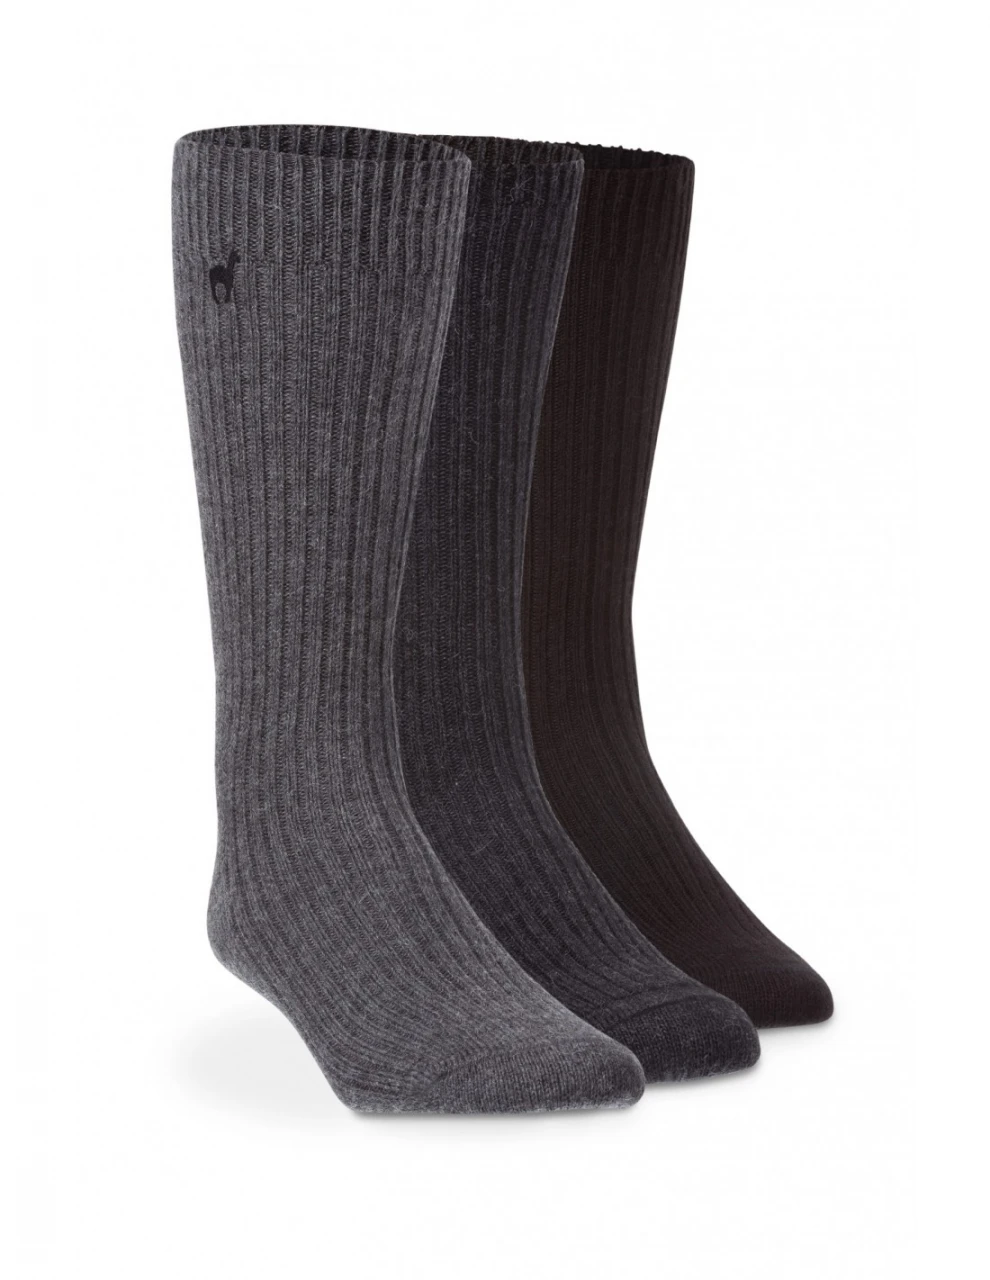 PREMIUM socks for women and men in Alpaca and Pima Cotton blend